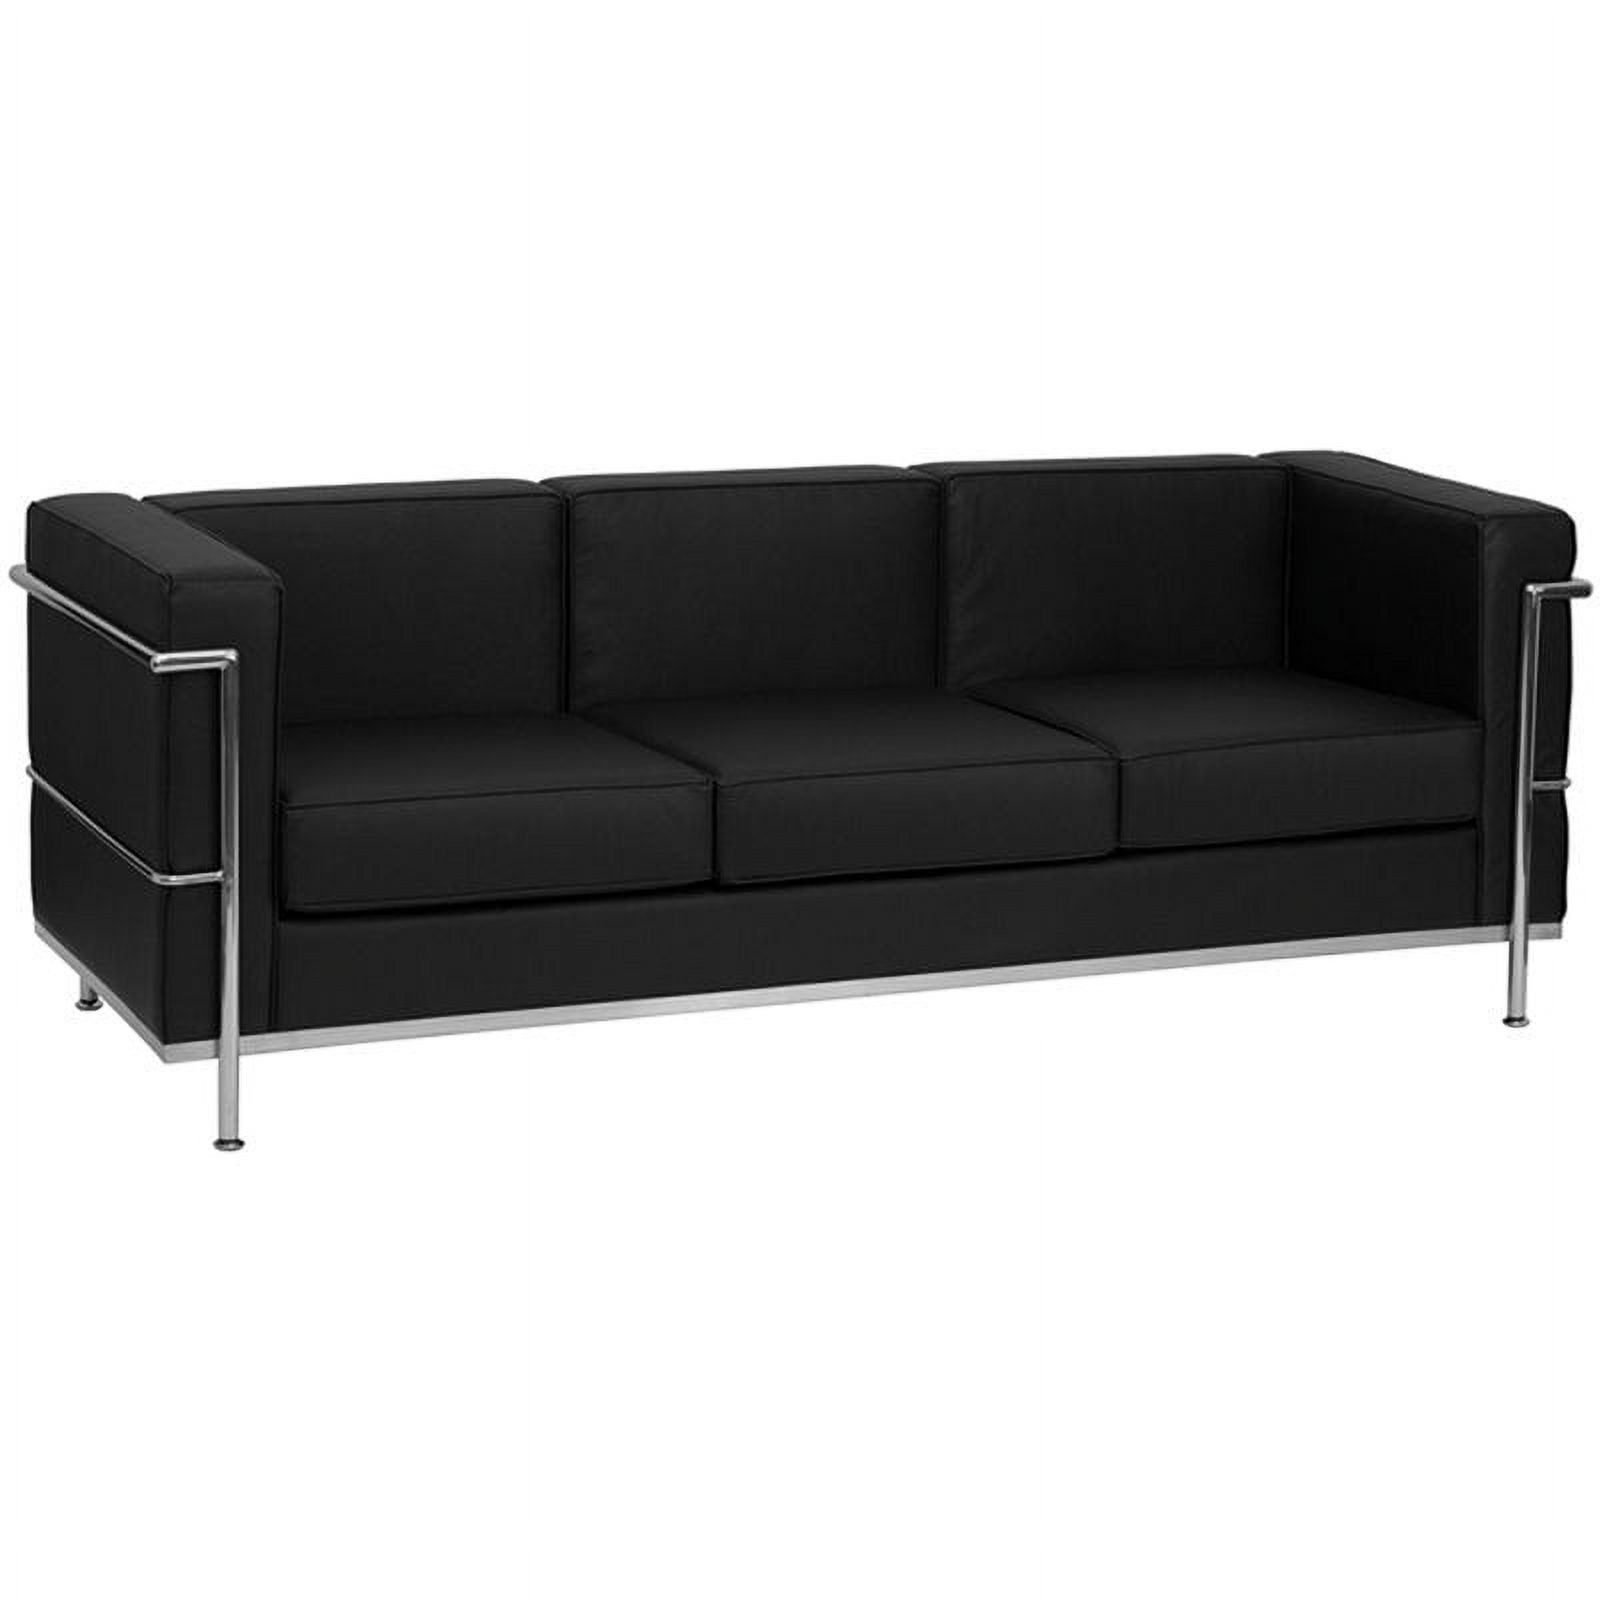 Flash Furniture Hercules Regal Series Reception Set in Black - image 2 of 5